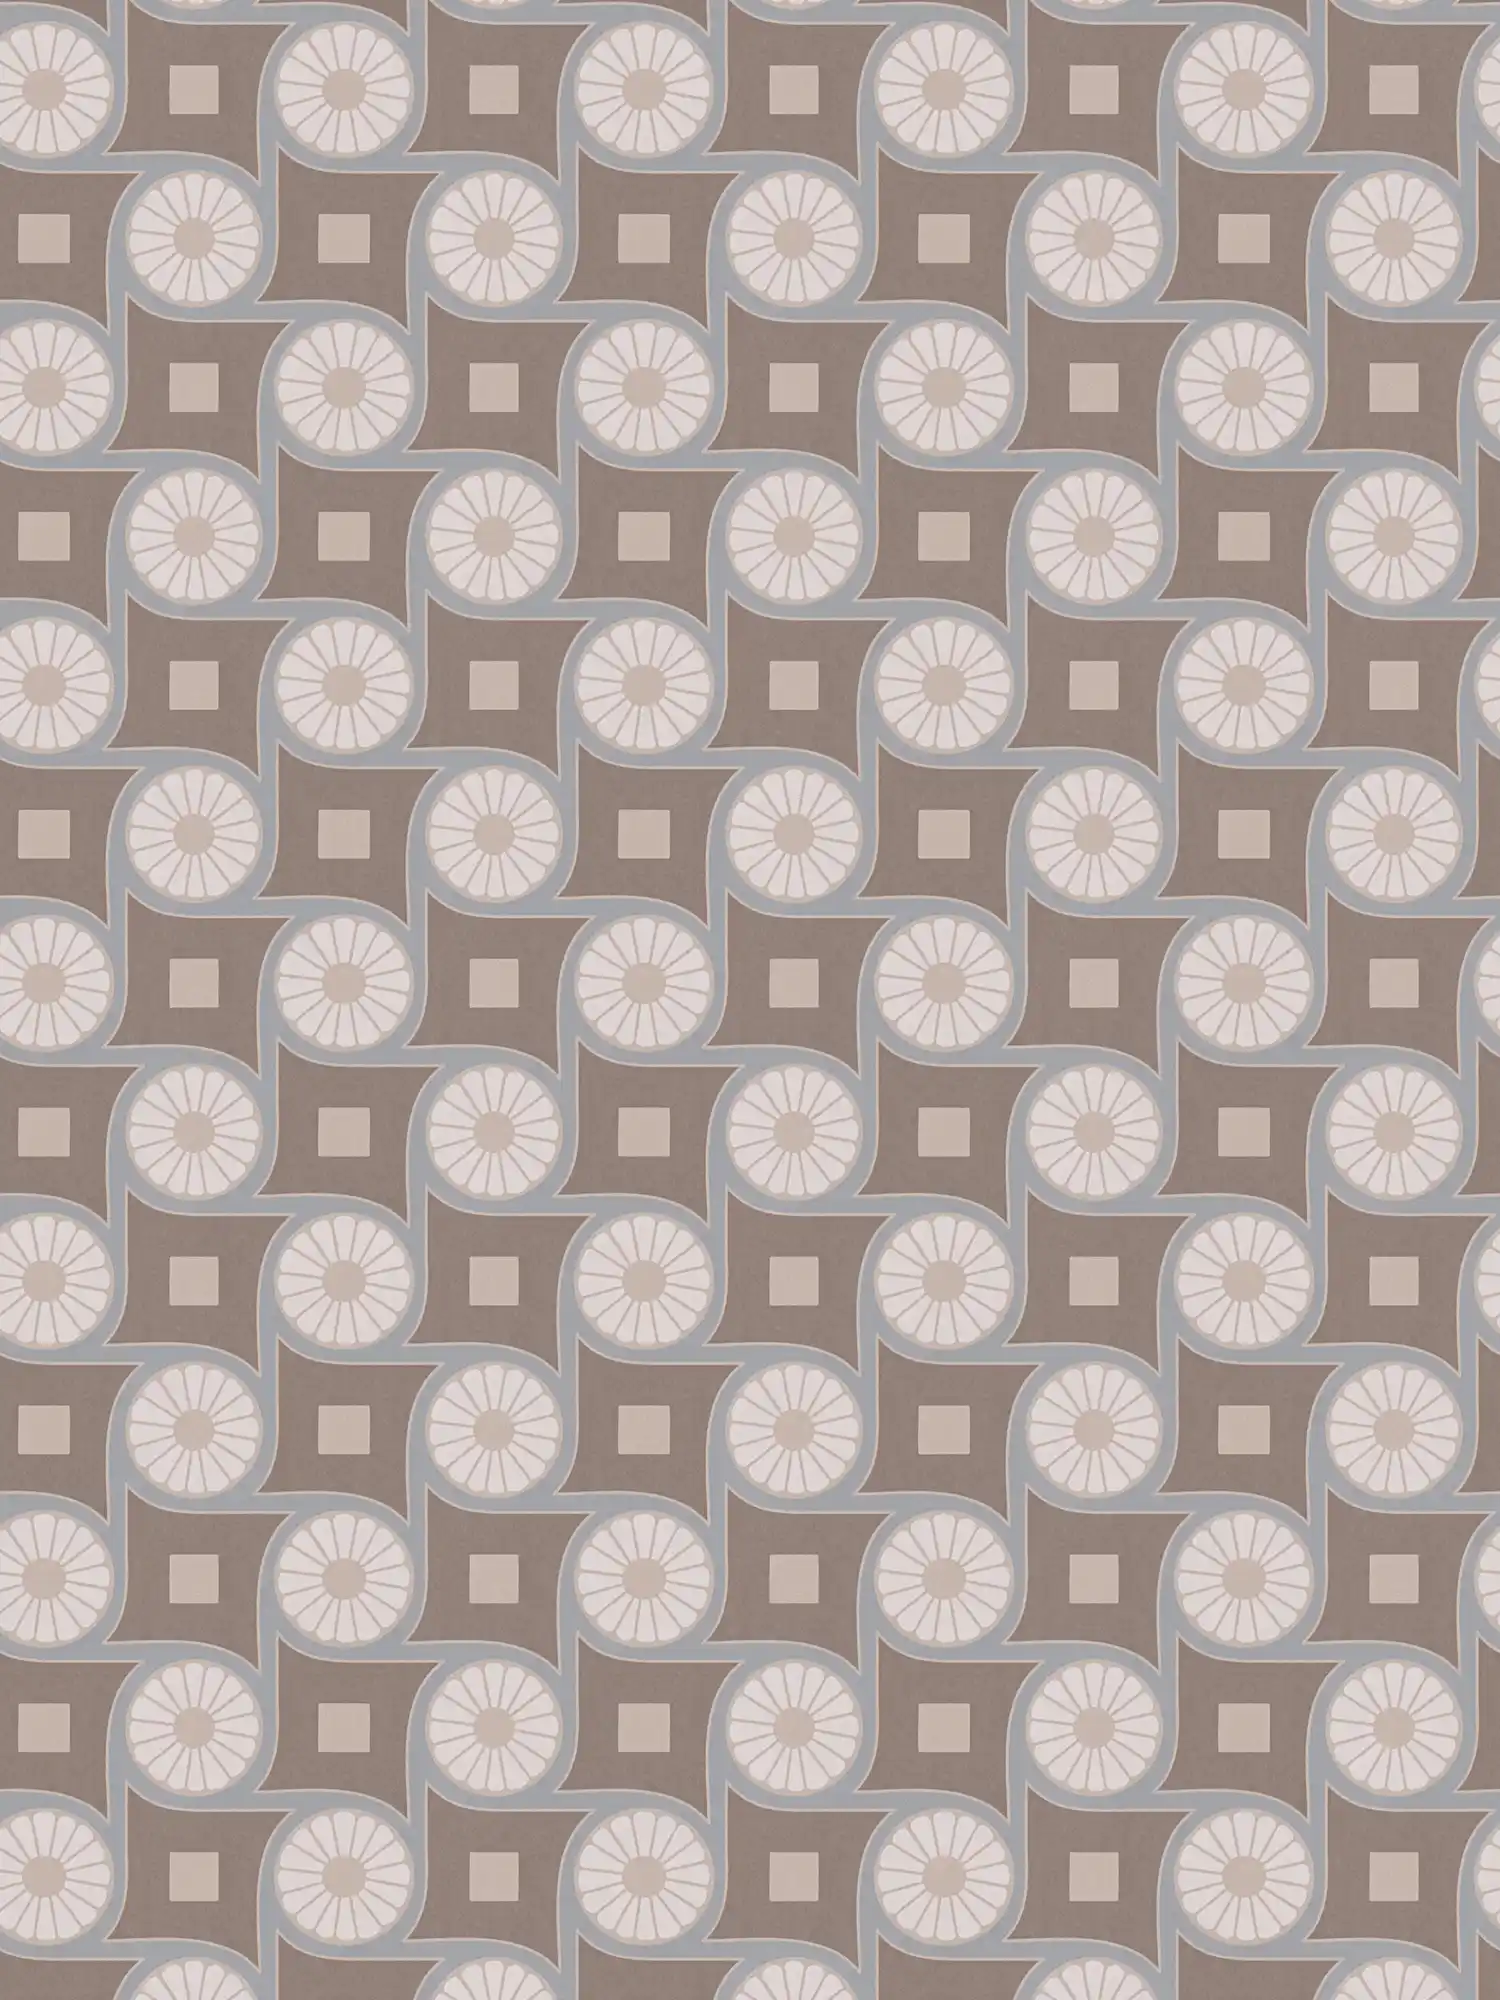 Non-woven wallpaper with retro pattern square & circle - grey, blue, white
